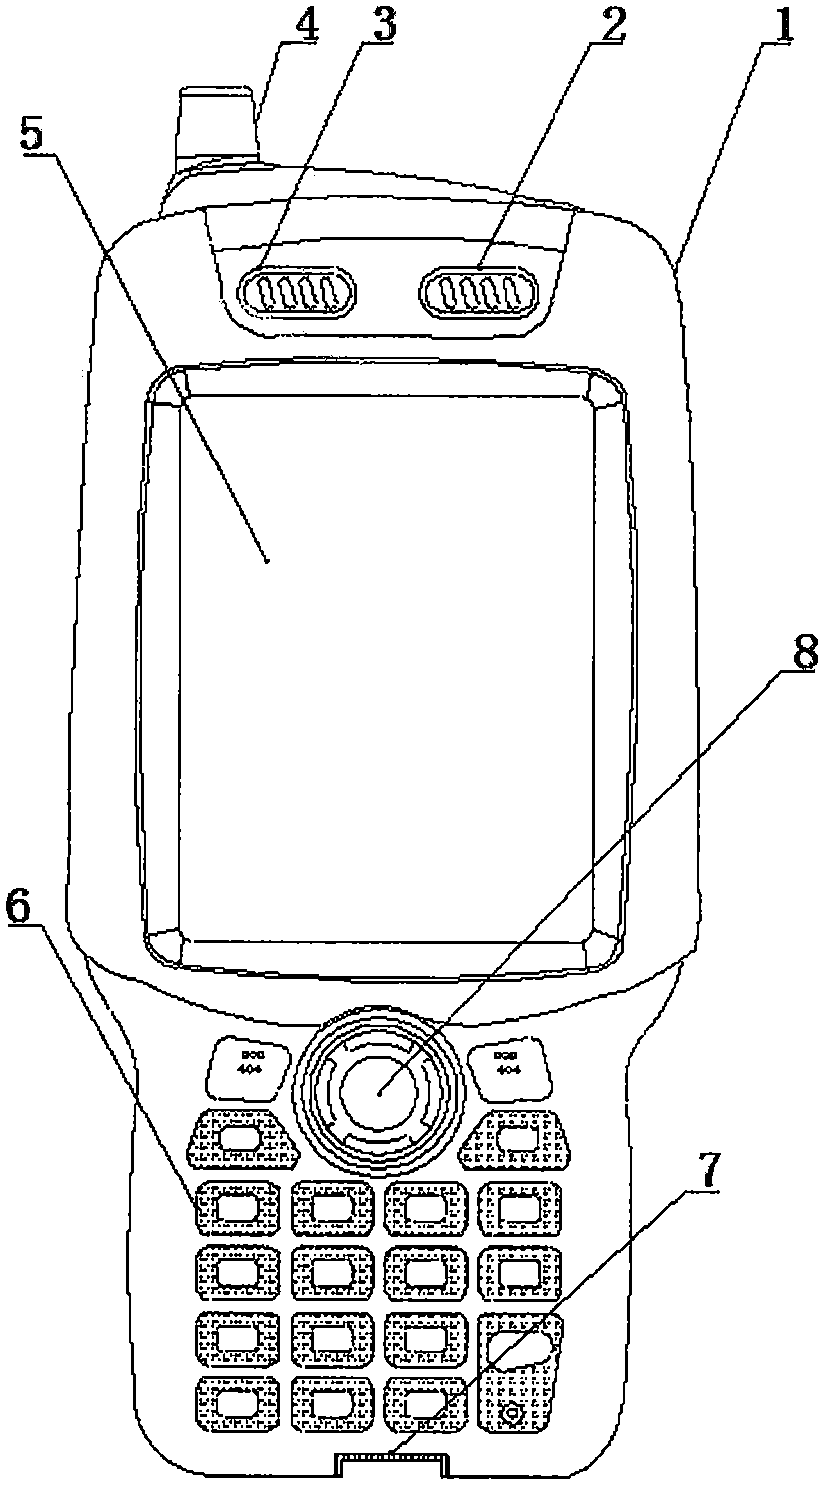 A medical device based on rfid handset